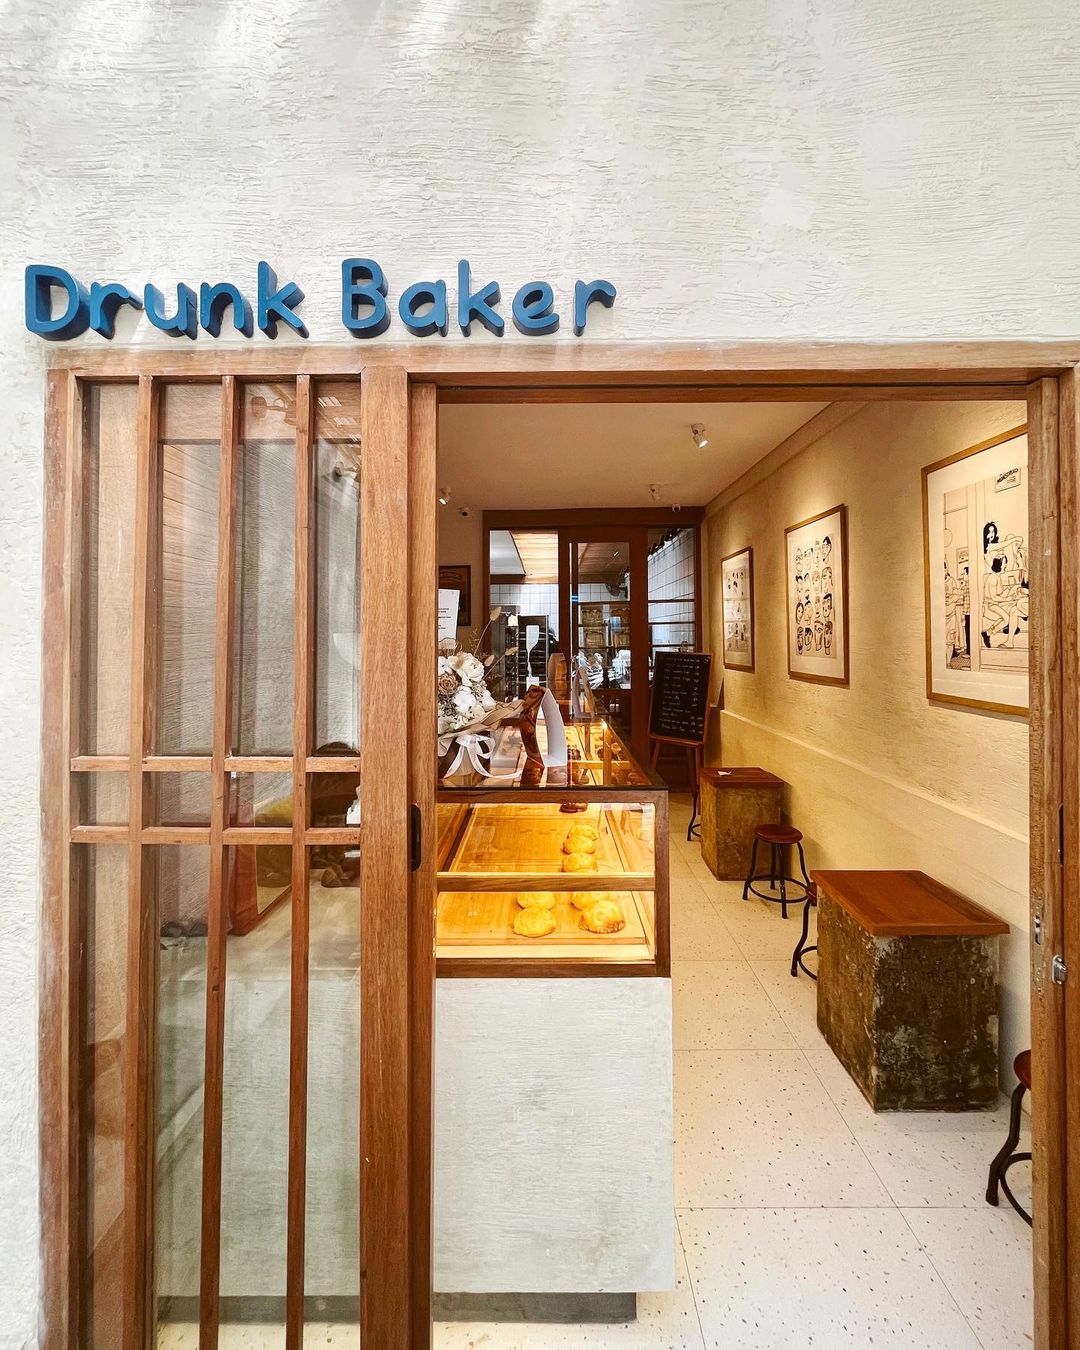 Lokasi Drunk Baker Bandung Image From @ratnaprawitasari